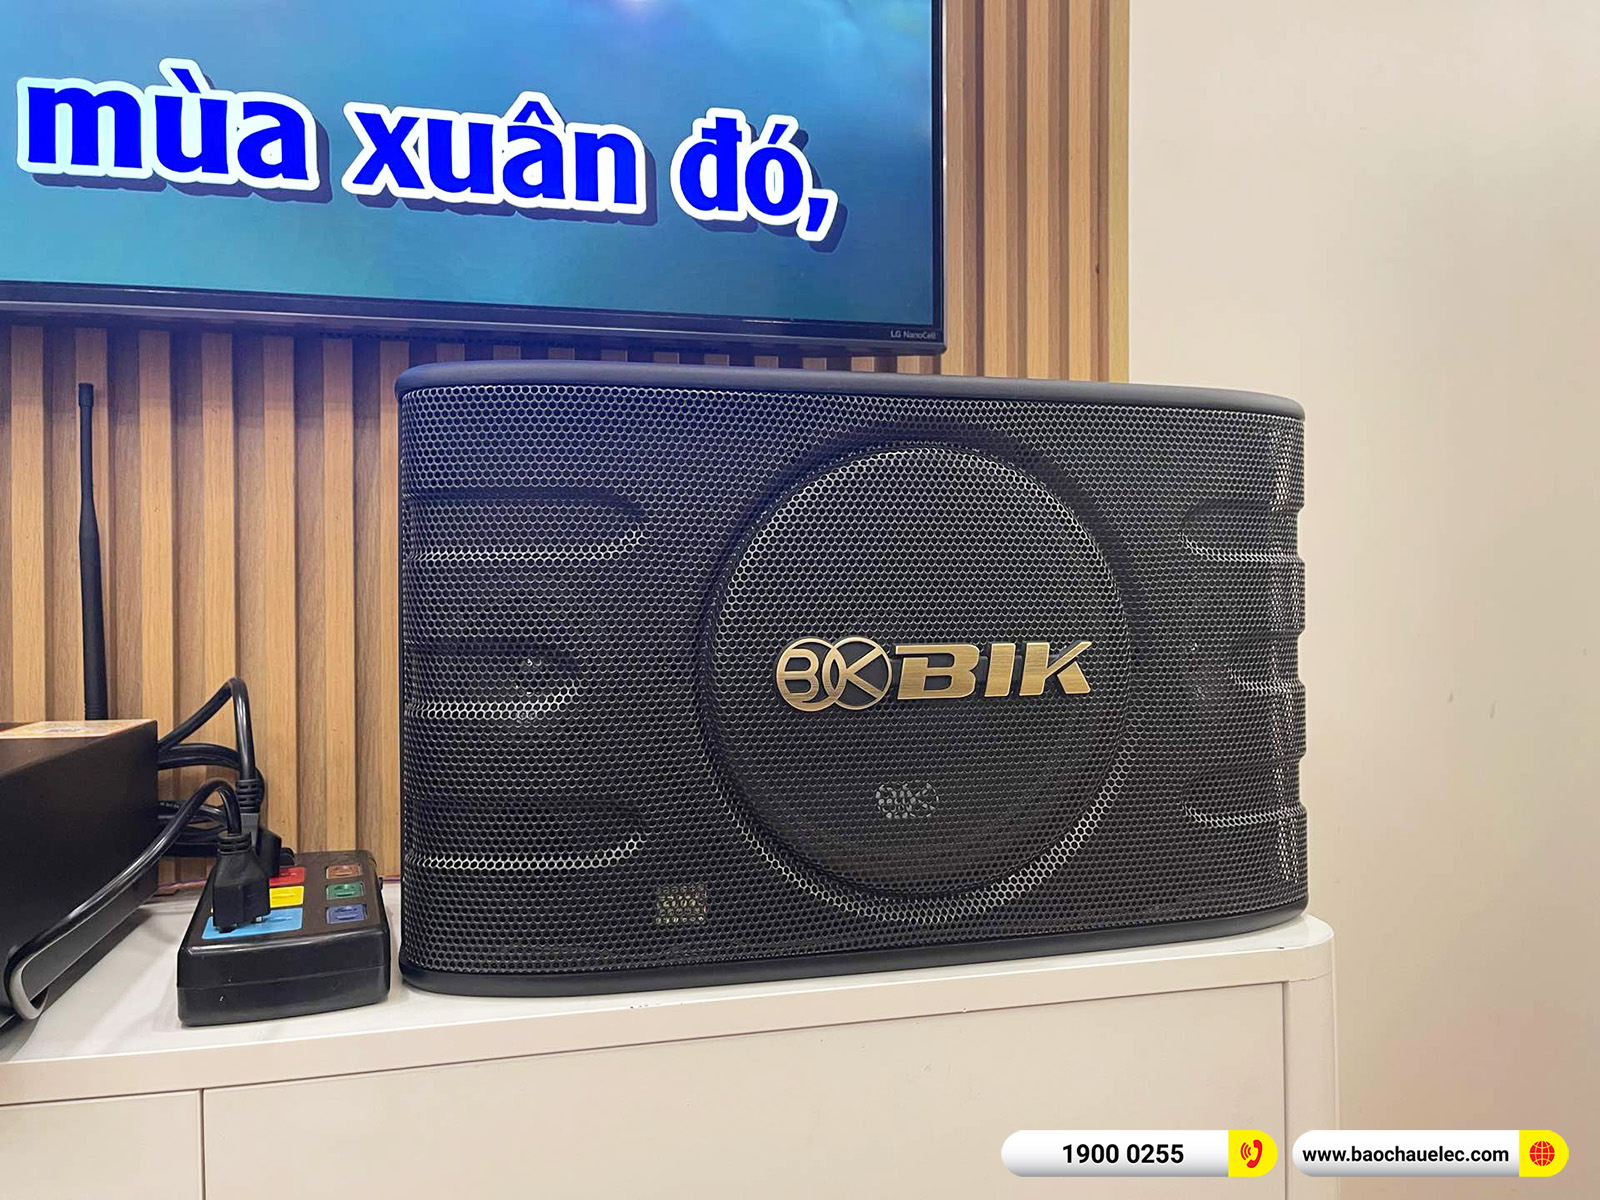 Lắp đặt dàn karaoke BIK hơn 18tr cho chị Lan Anh tại Hà Nội (BIK BJ-S668, BKSound DKA 5500, SW512) 